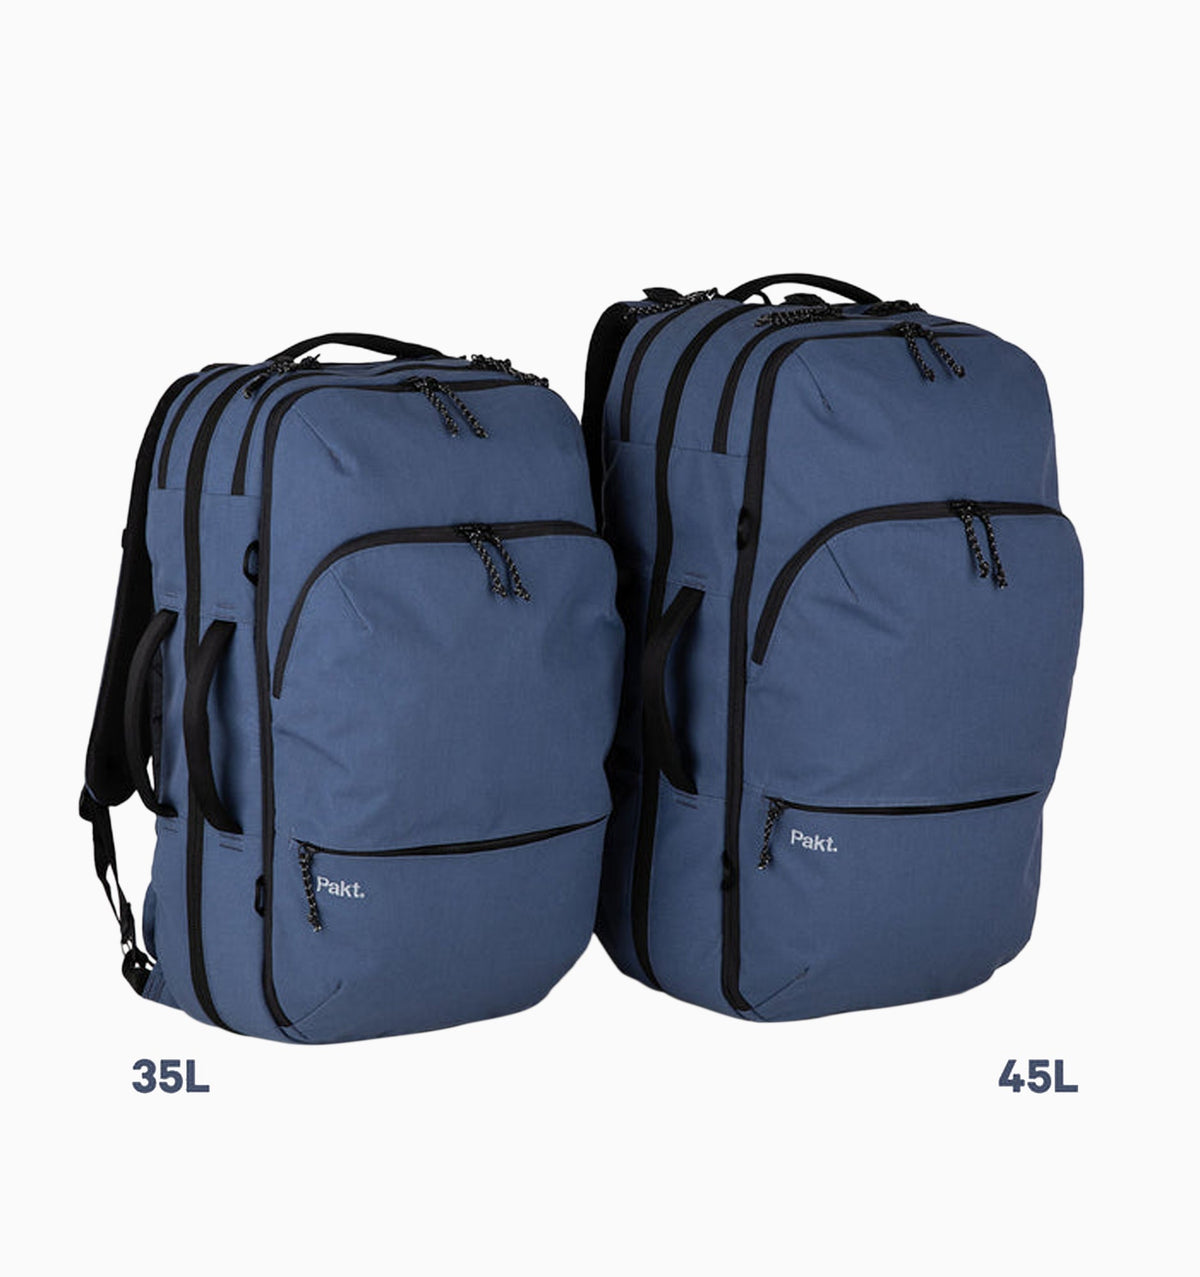 Pakt 16" Travel Backpack V2 45L - Ocean